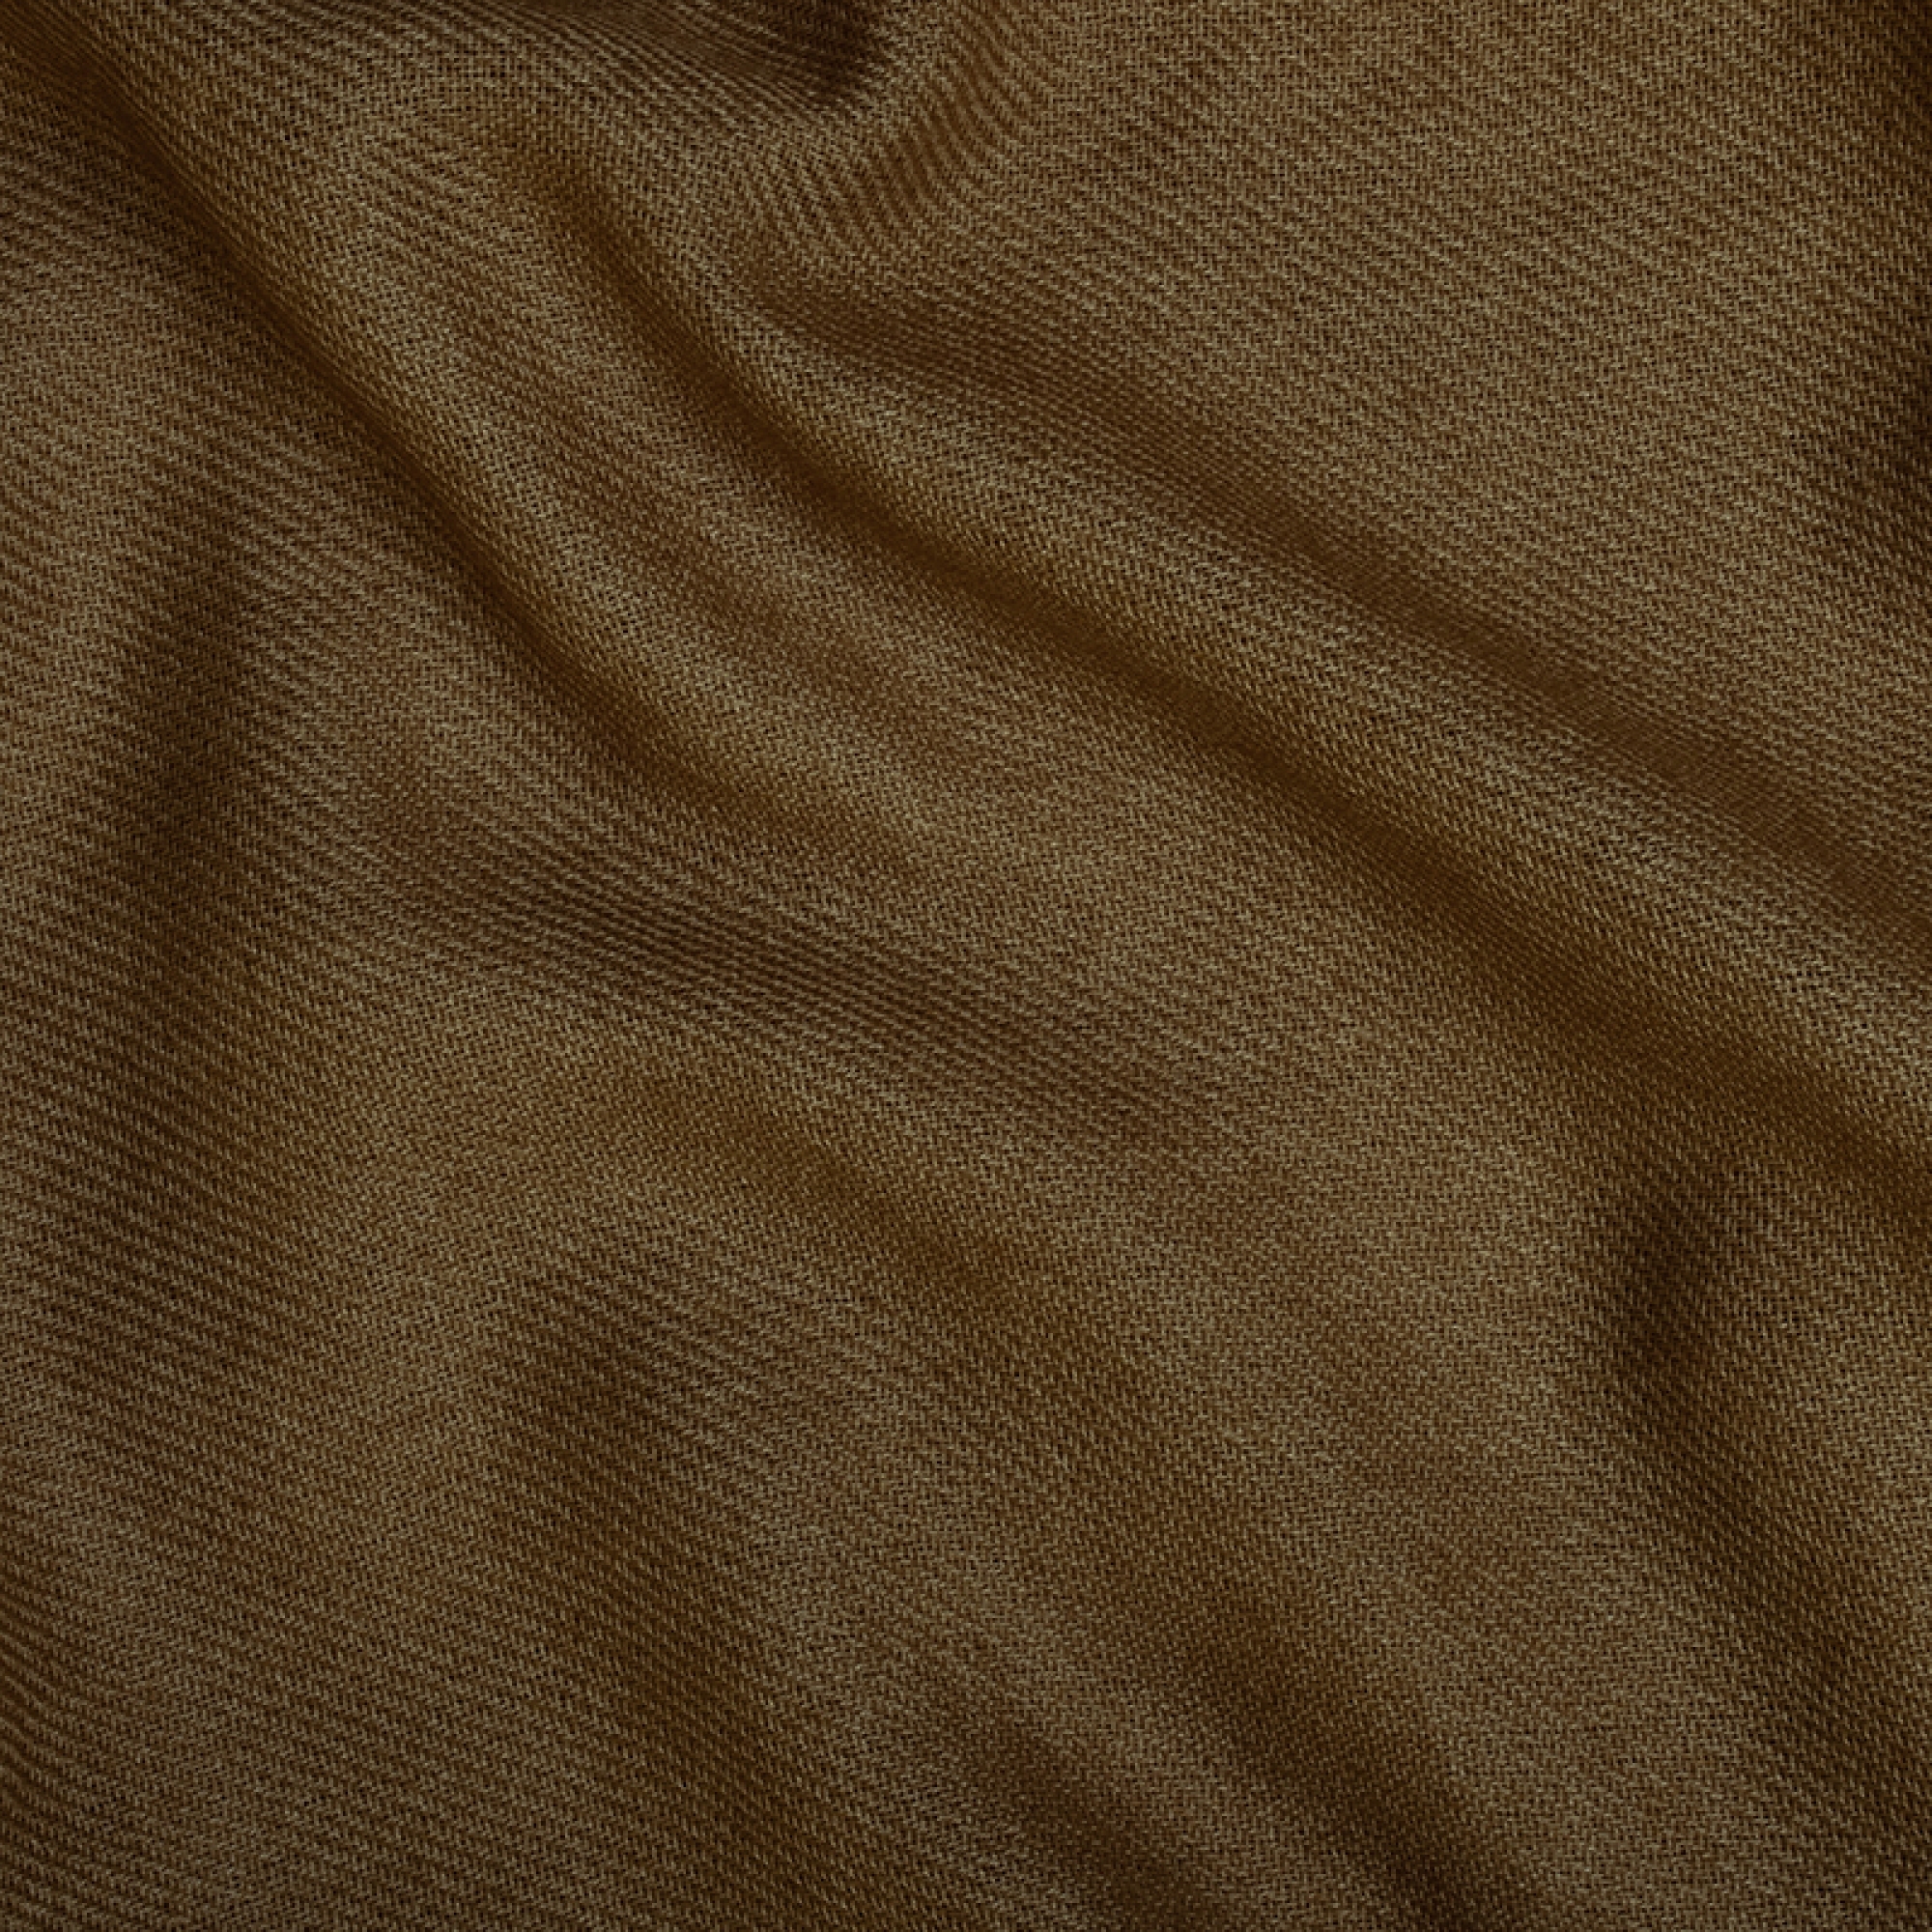 Cashmere accessories blanket toodoo plain s 140 x 200 bronze 140 x 200 cm